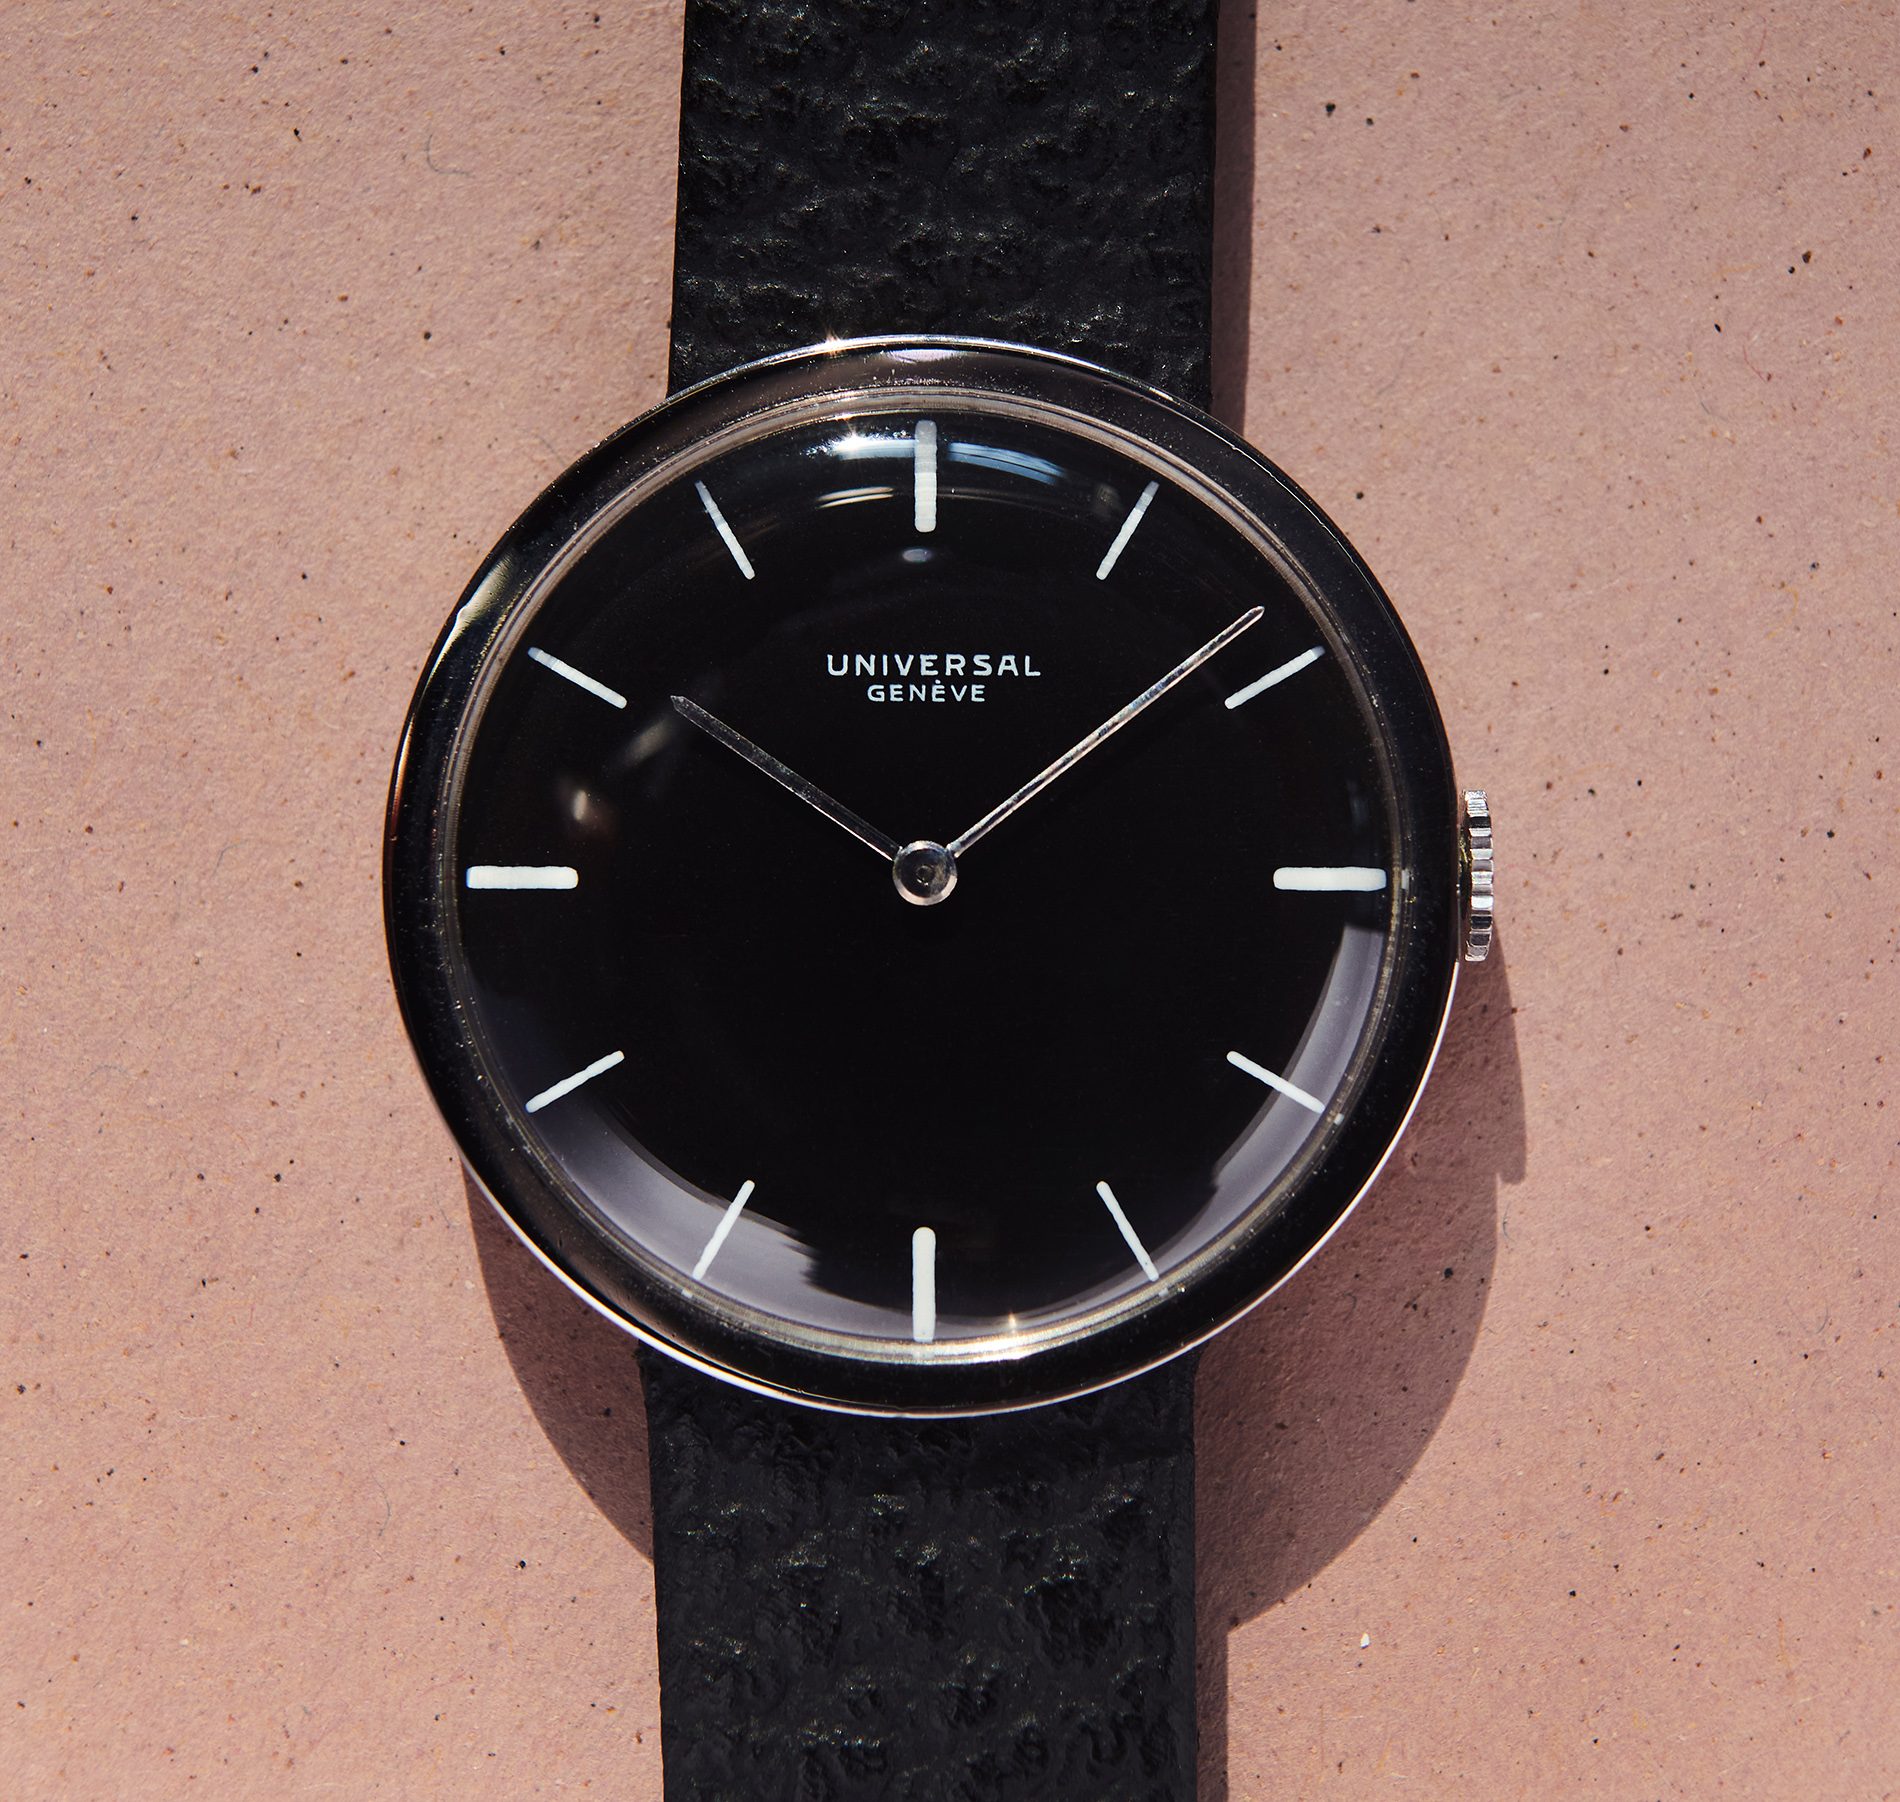 Universal Geneve Bauhaus watch 1937